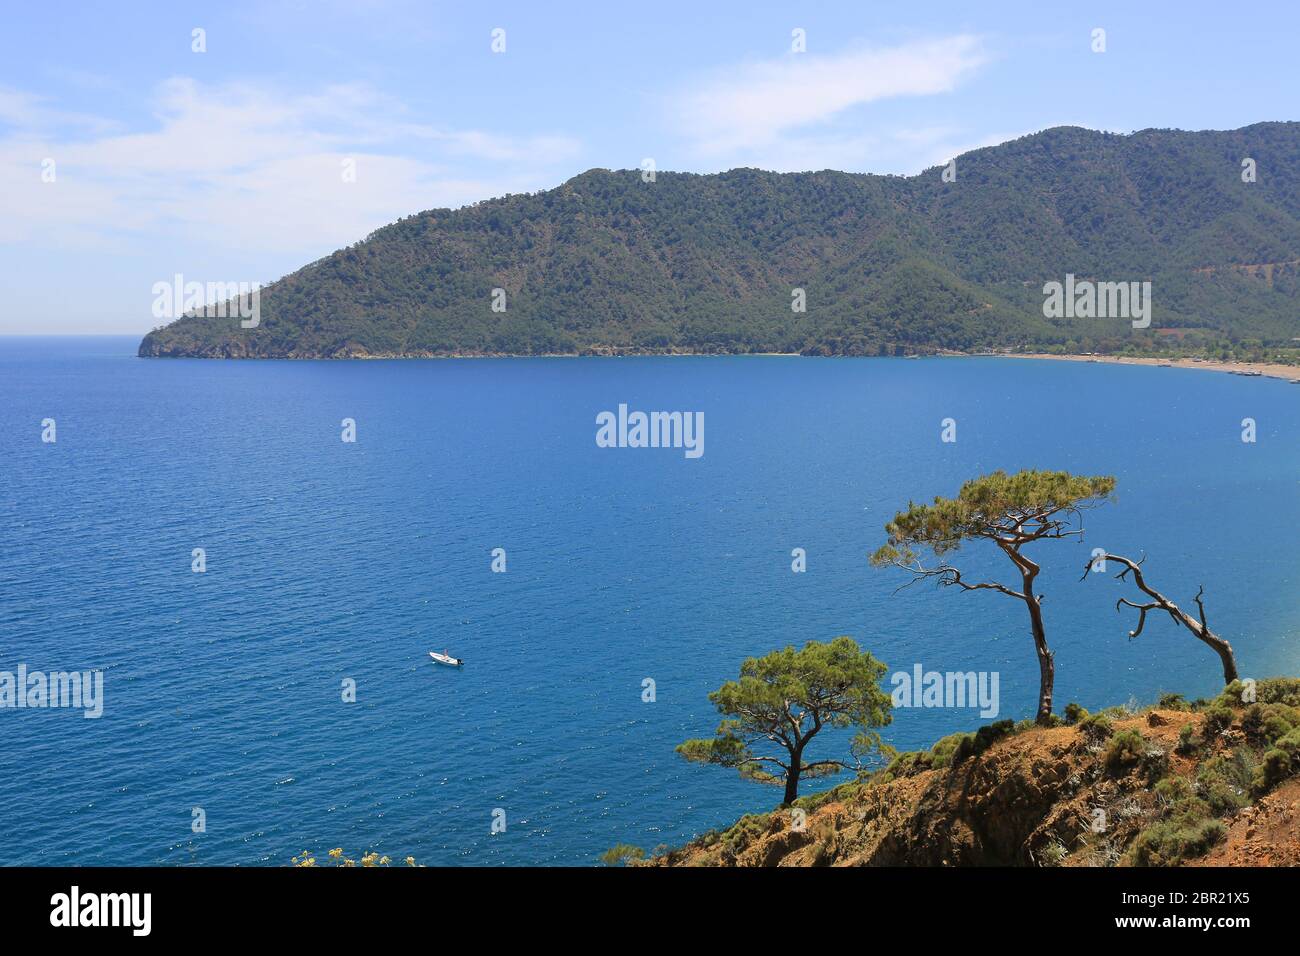 Landsacpe with pine trees on mountain slope on sea background. Adrasan bay, Mediterranean Sea in Turkey Stock Photo